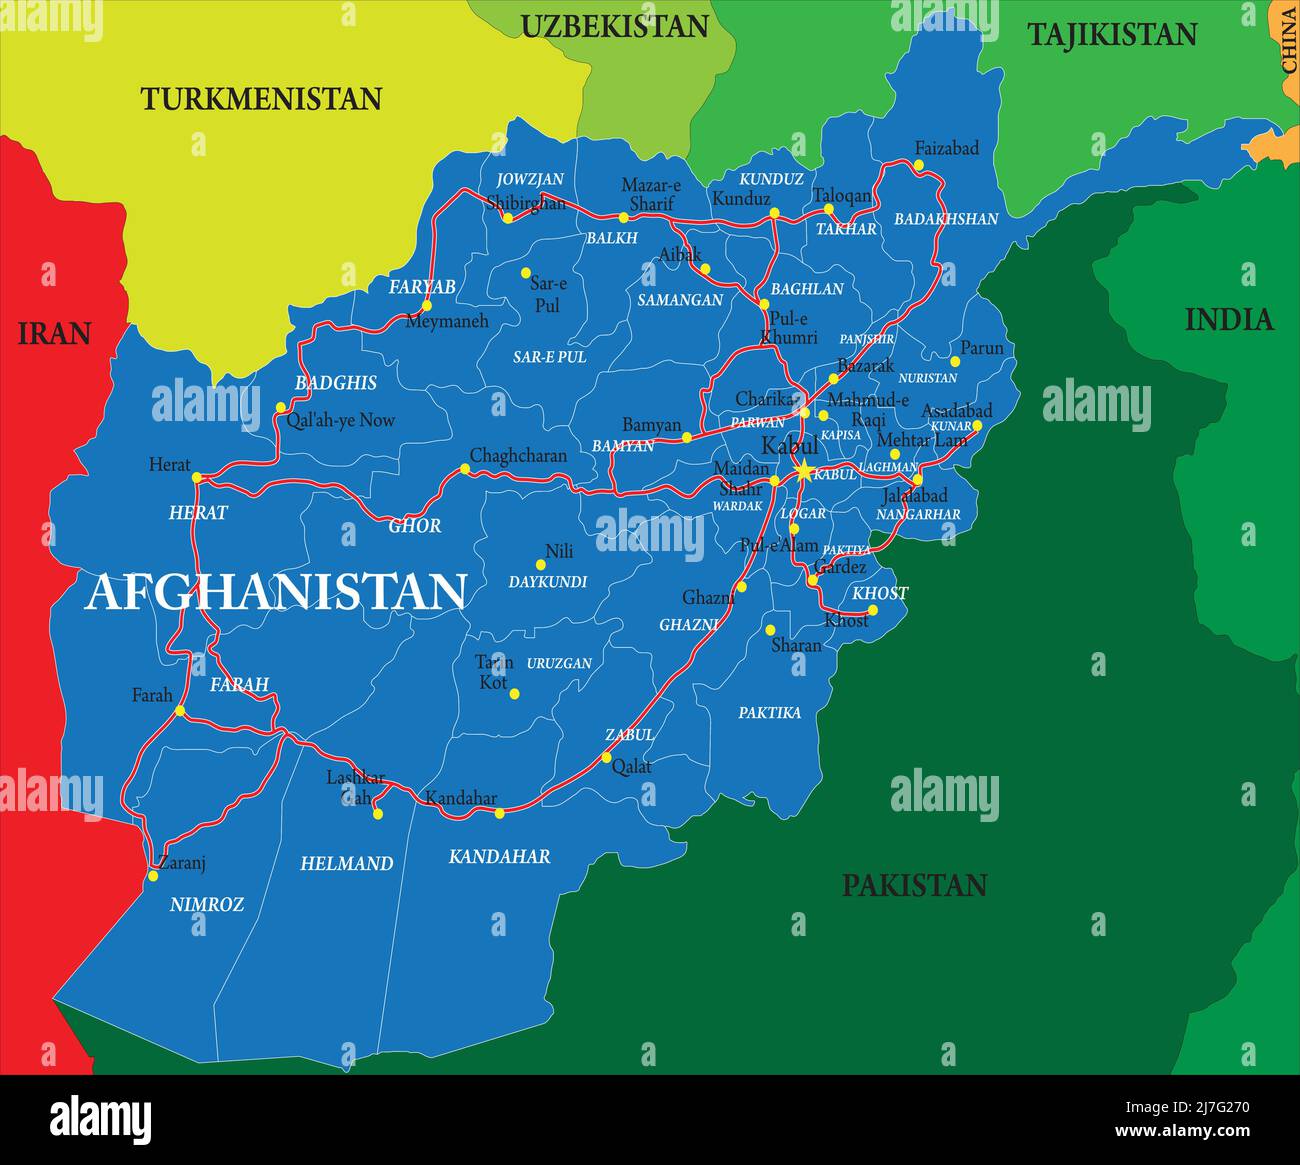 Ihtesham Afghan na platformě X: „Ring Road Jalalabad Beautiful Afghanistan  ❤️ #Afghanistan https://t.co/vq3oZ8cKFf“ / X